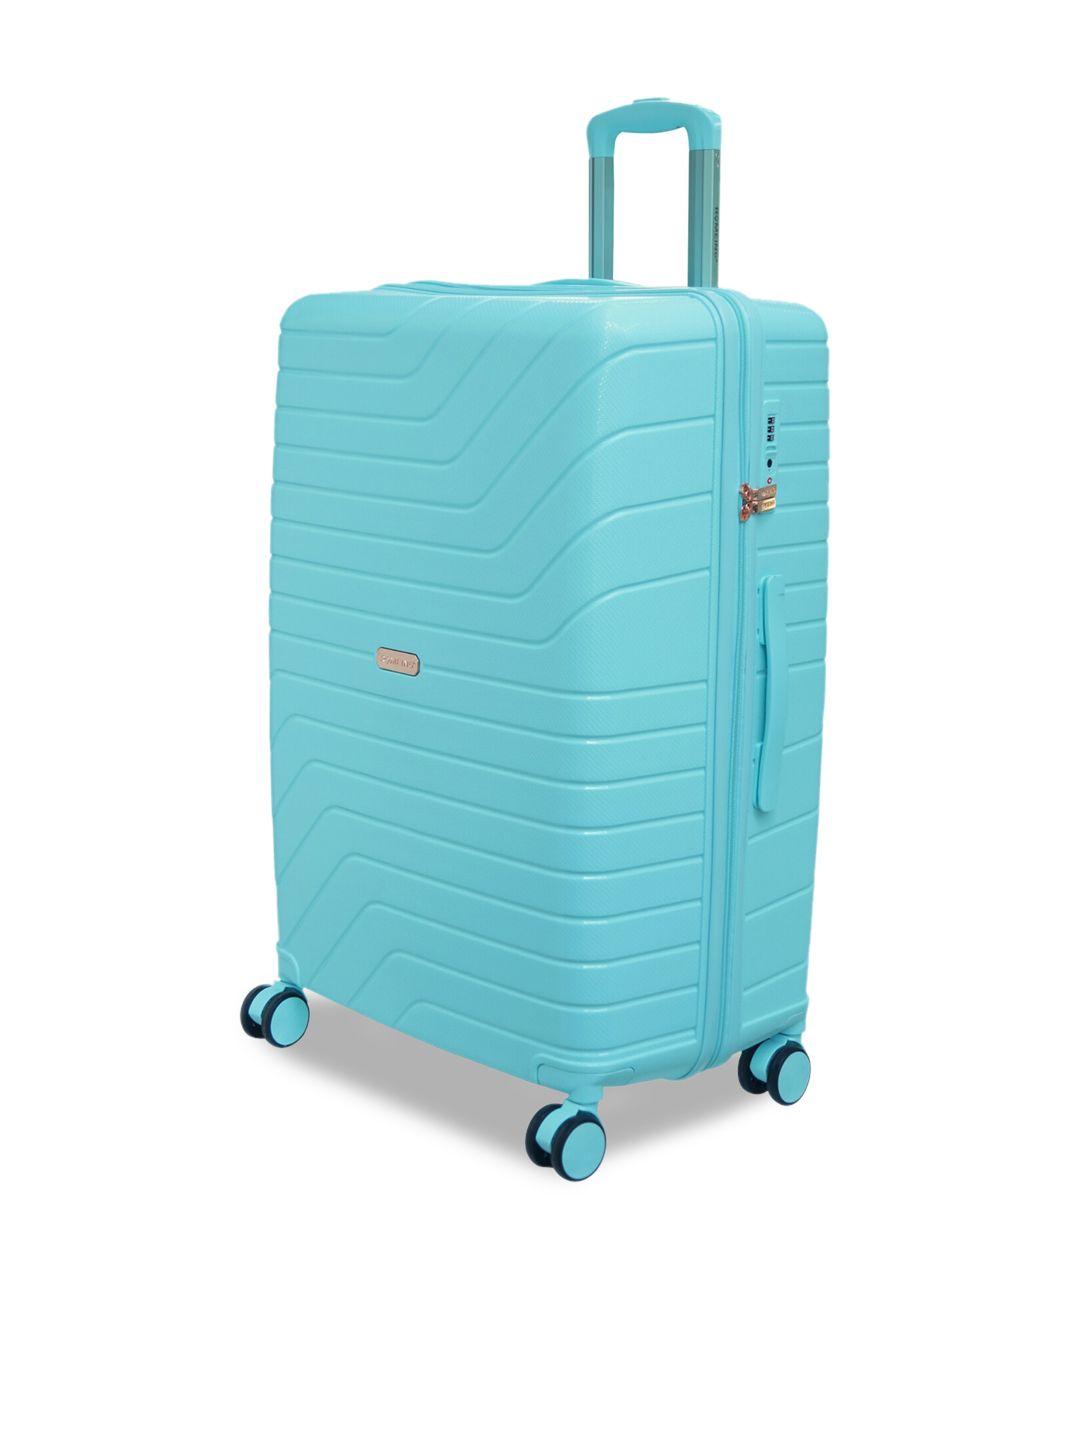 romeing tuscany turquoise blue hard side large trolley suitcase